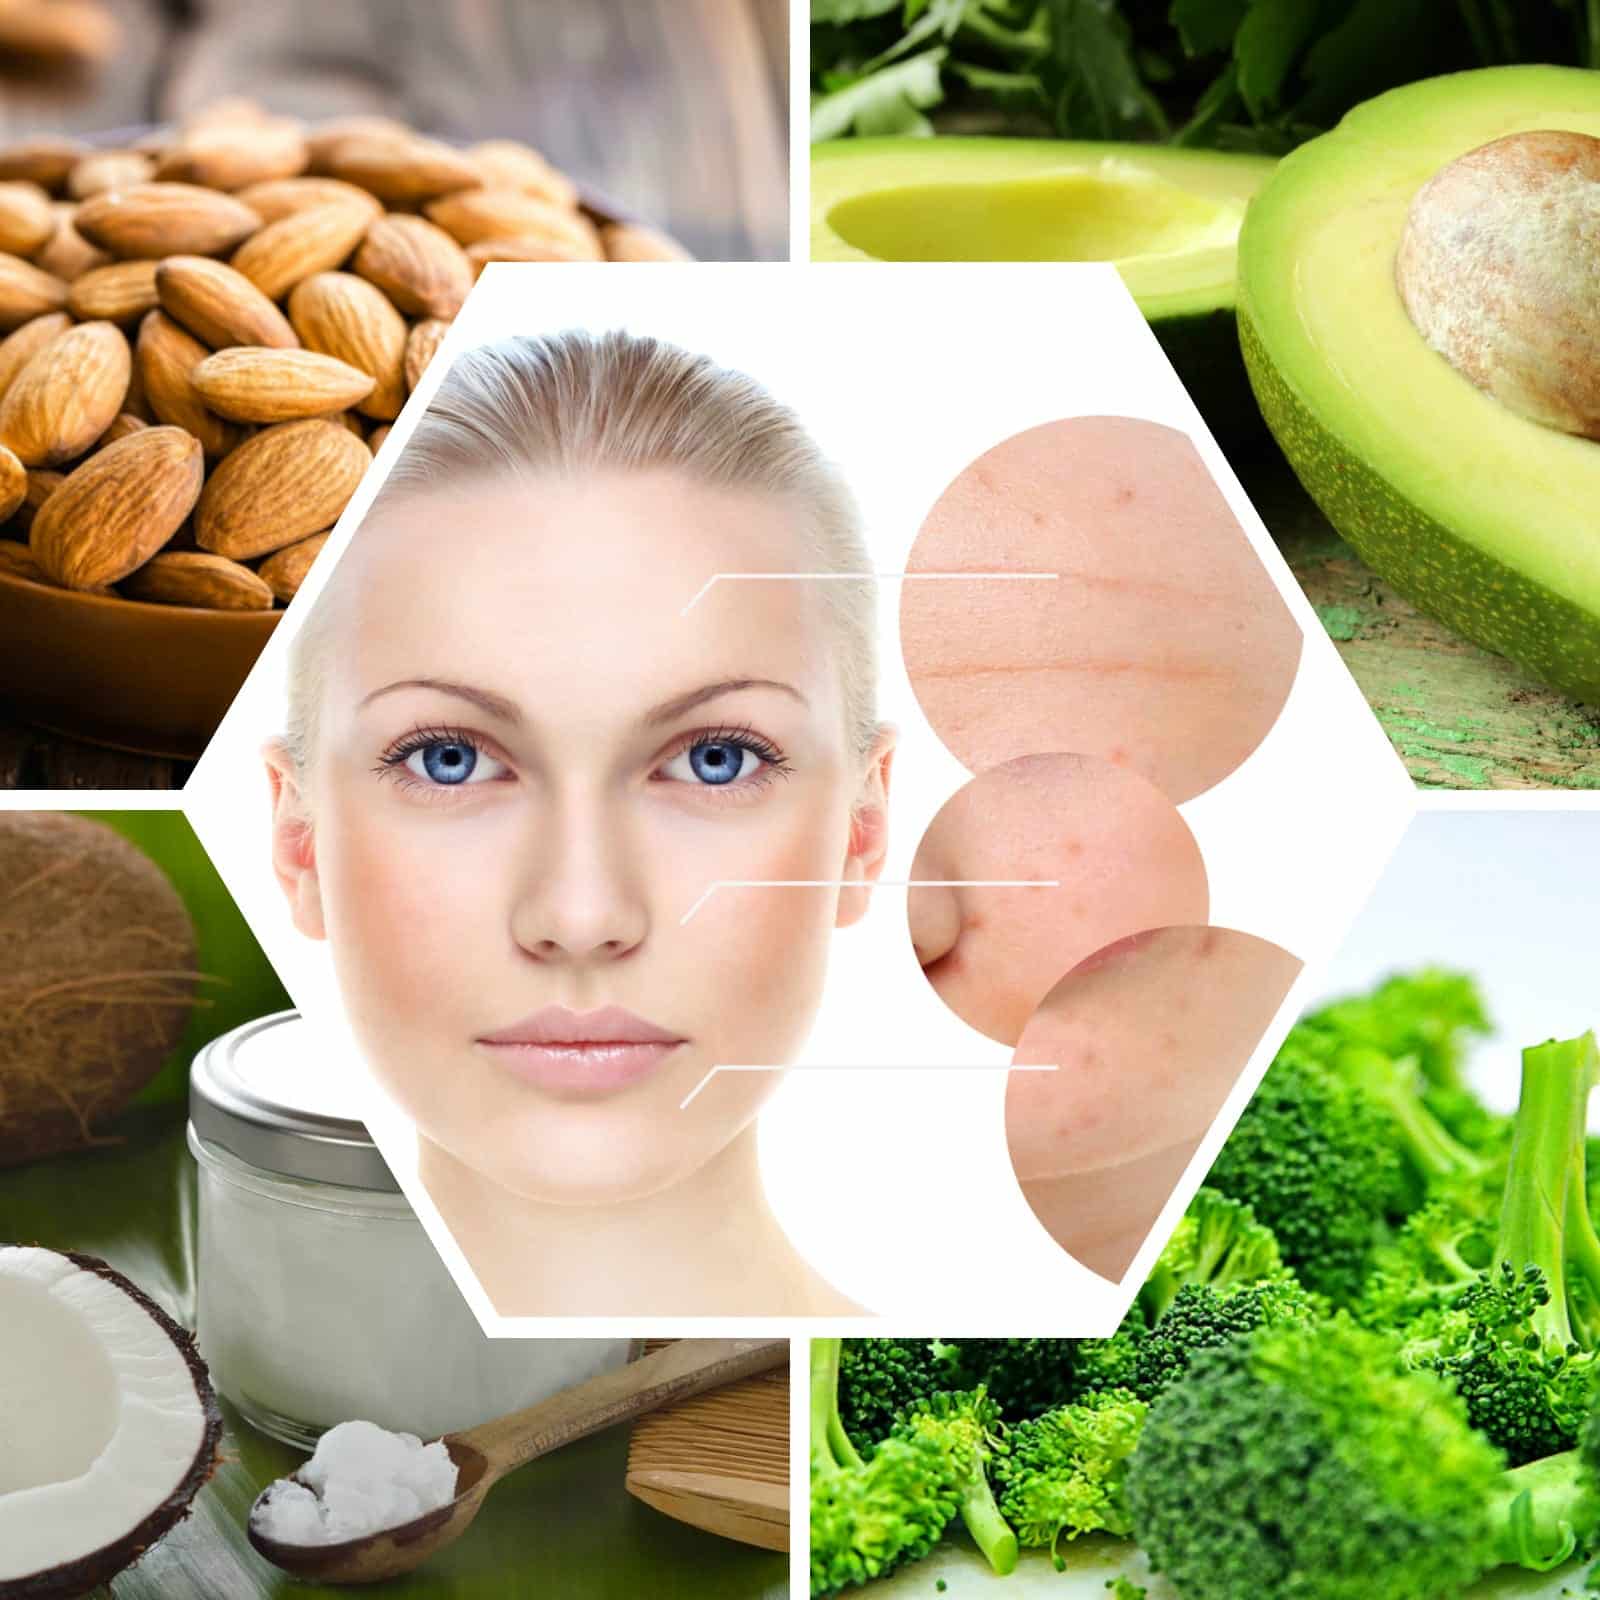 14 Super Foods for Acne Prone Skin